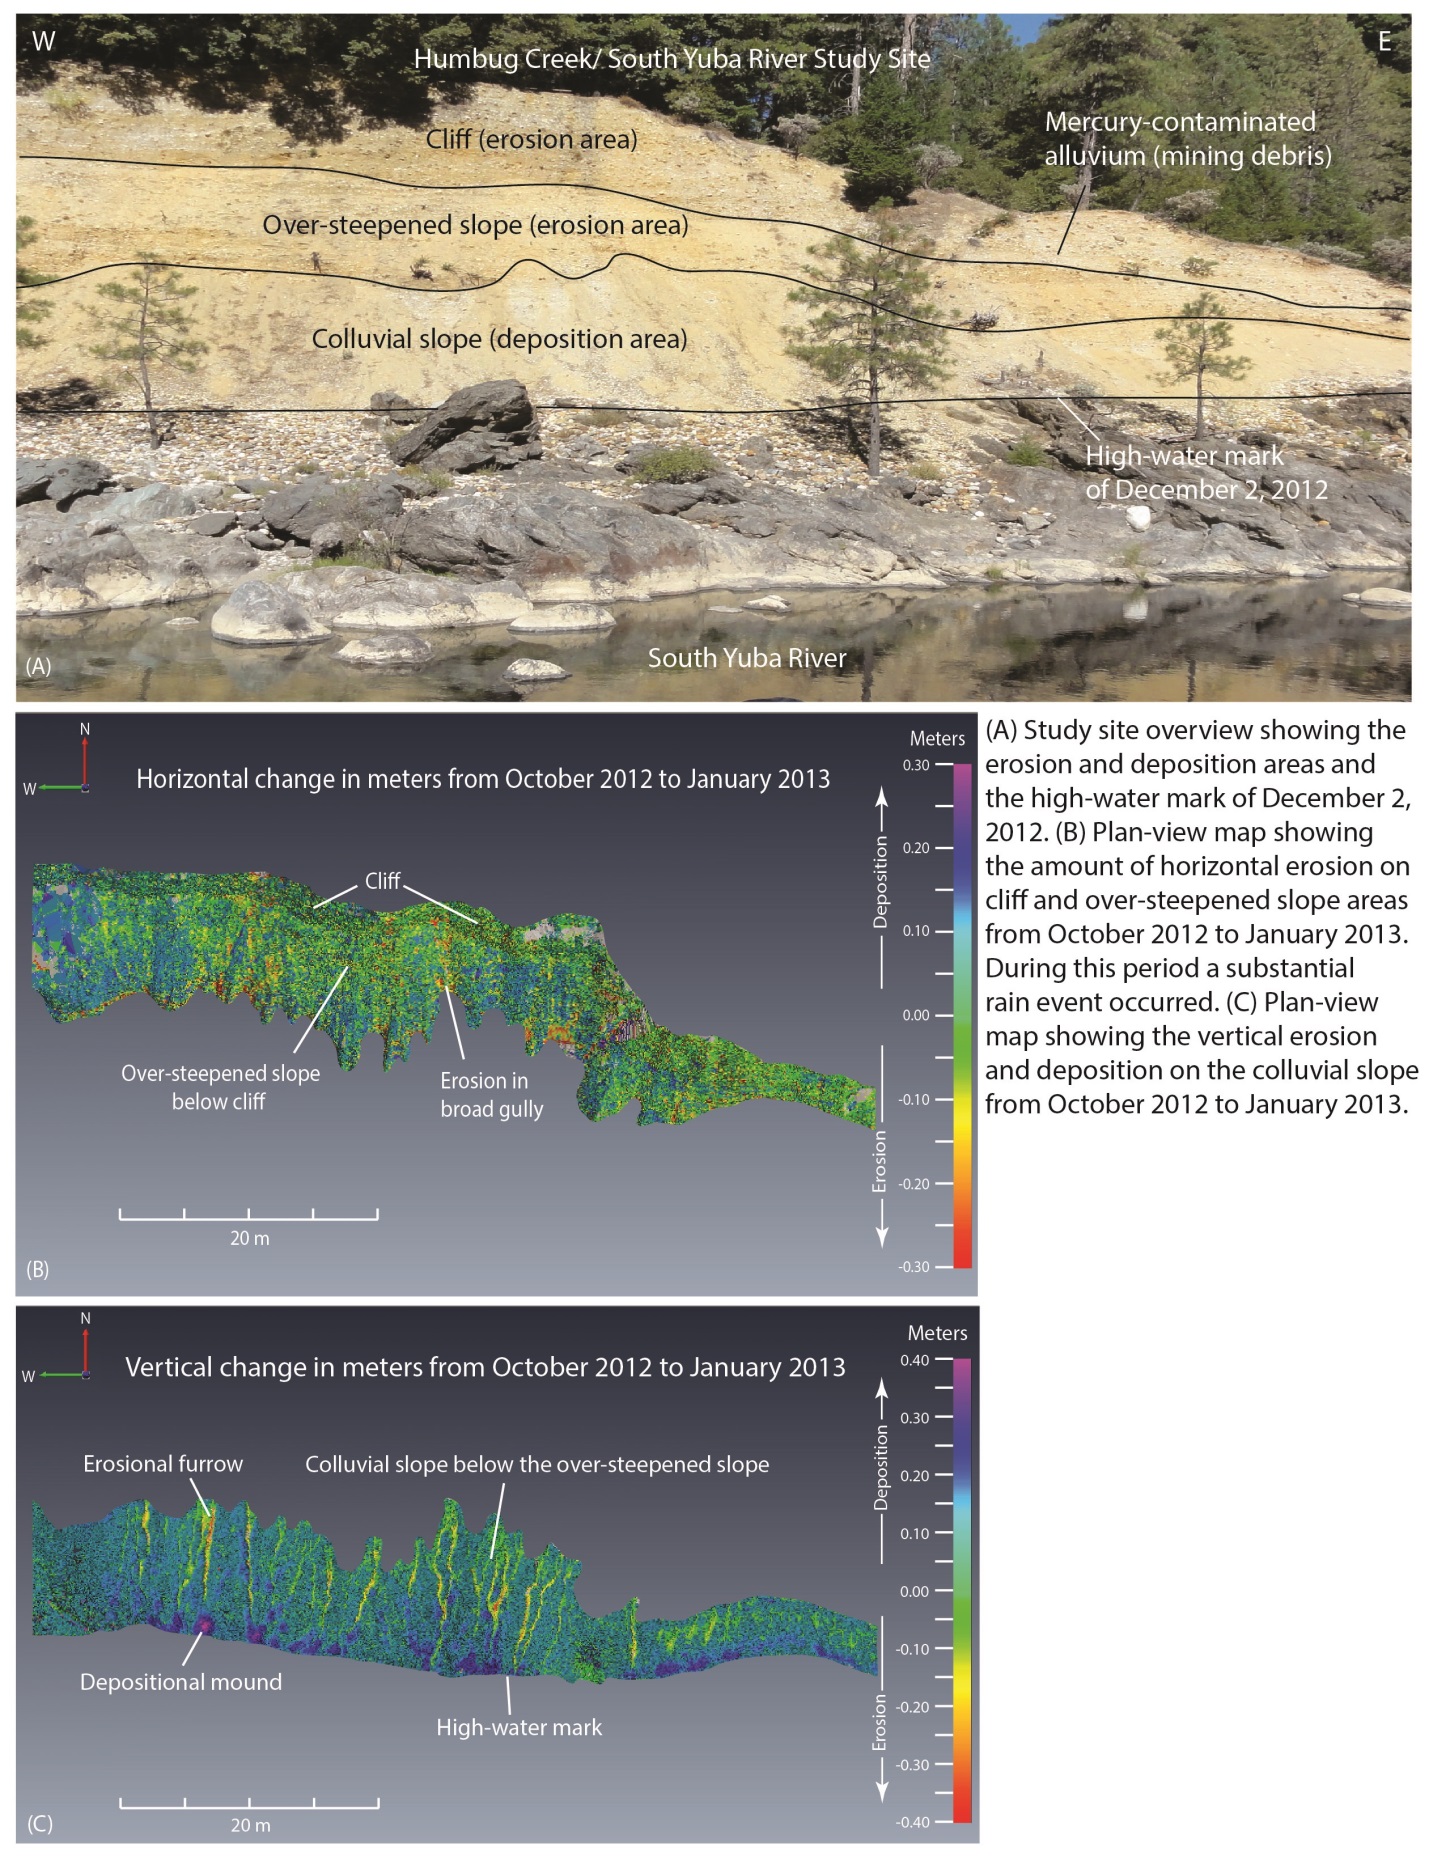 Quantifying Erosion of Mercury-Contaminated Gold Mining Debris at South Yuba River, California